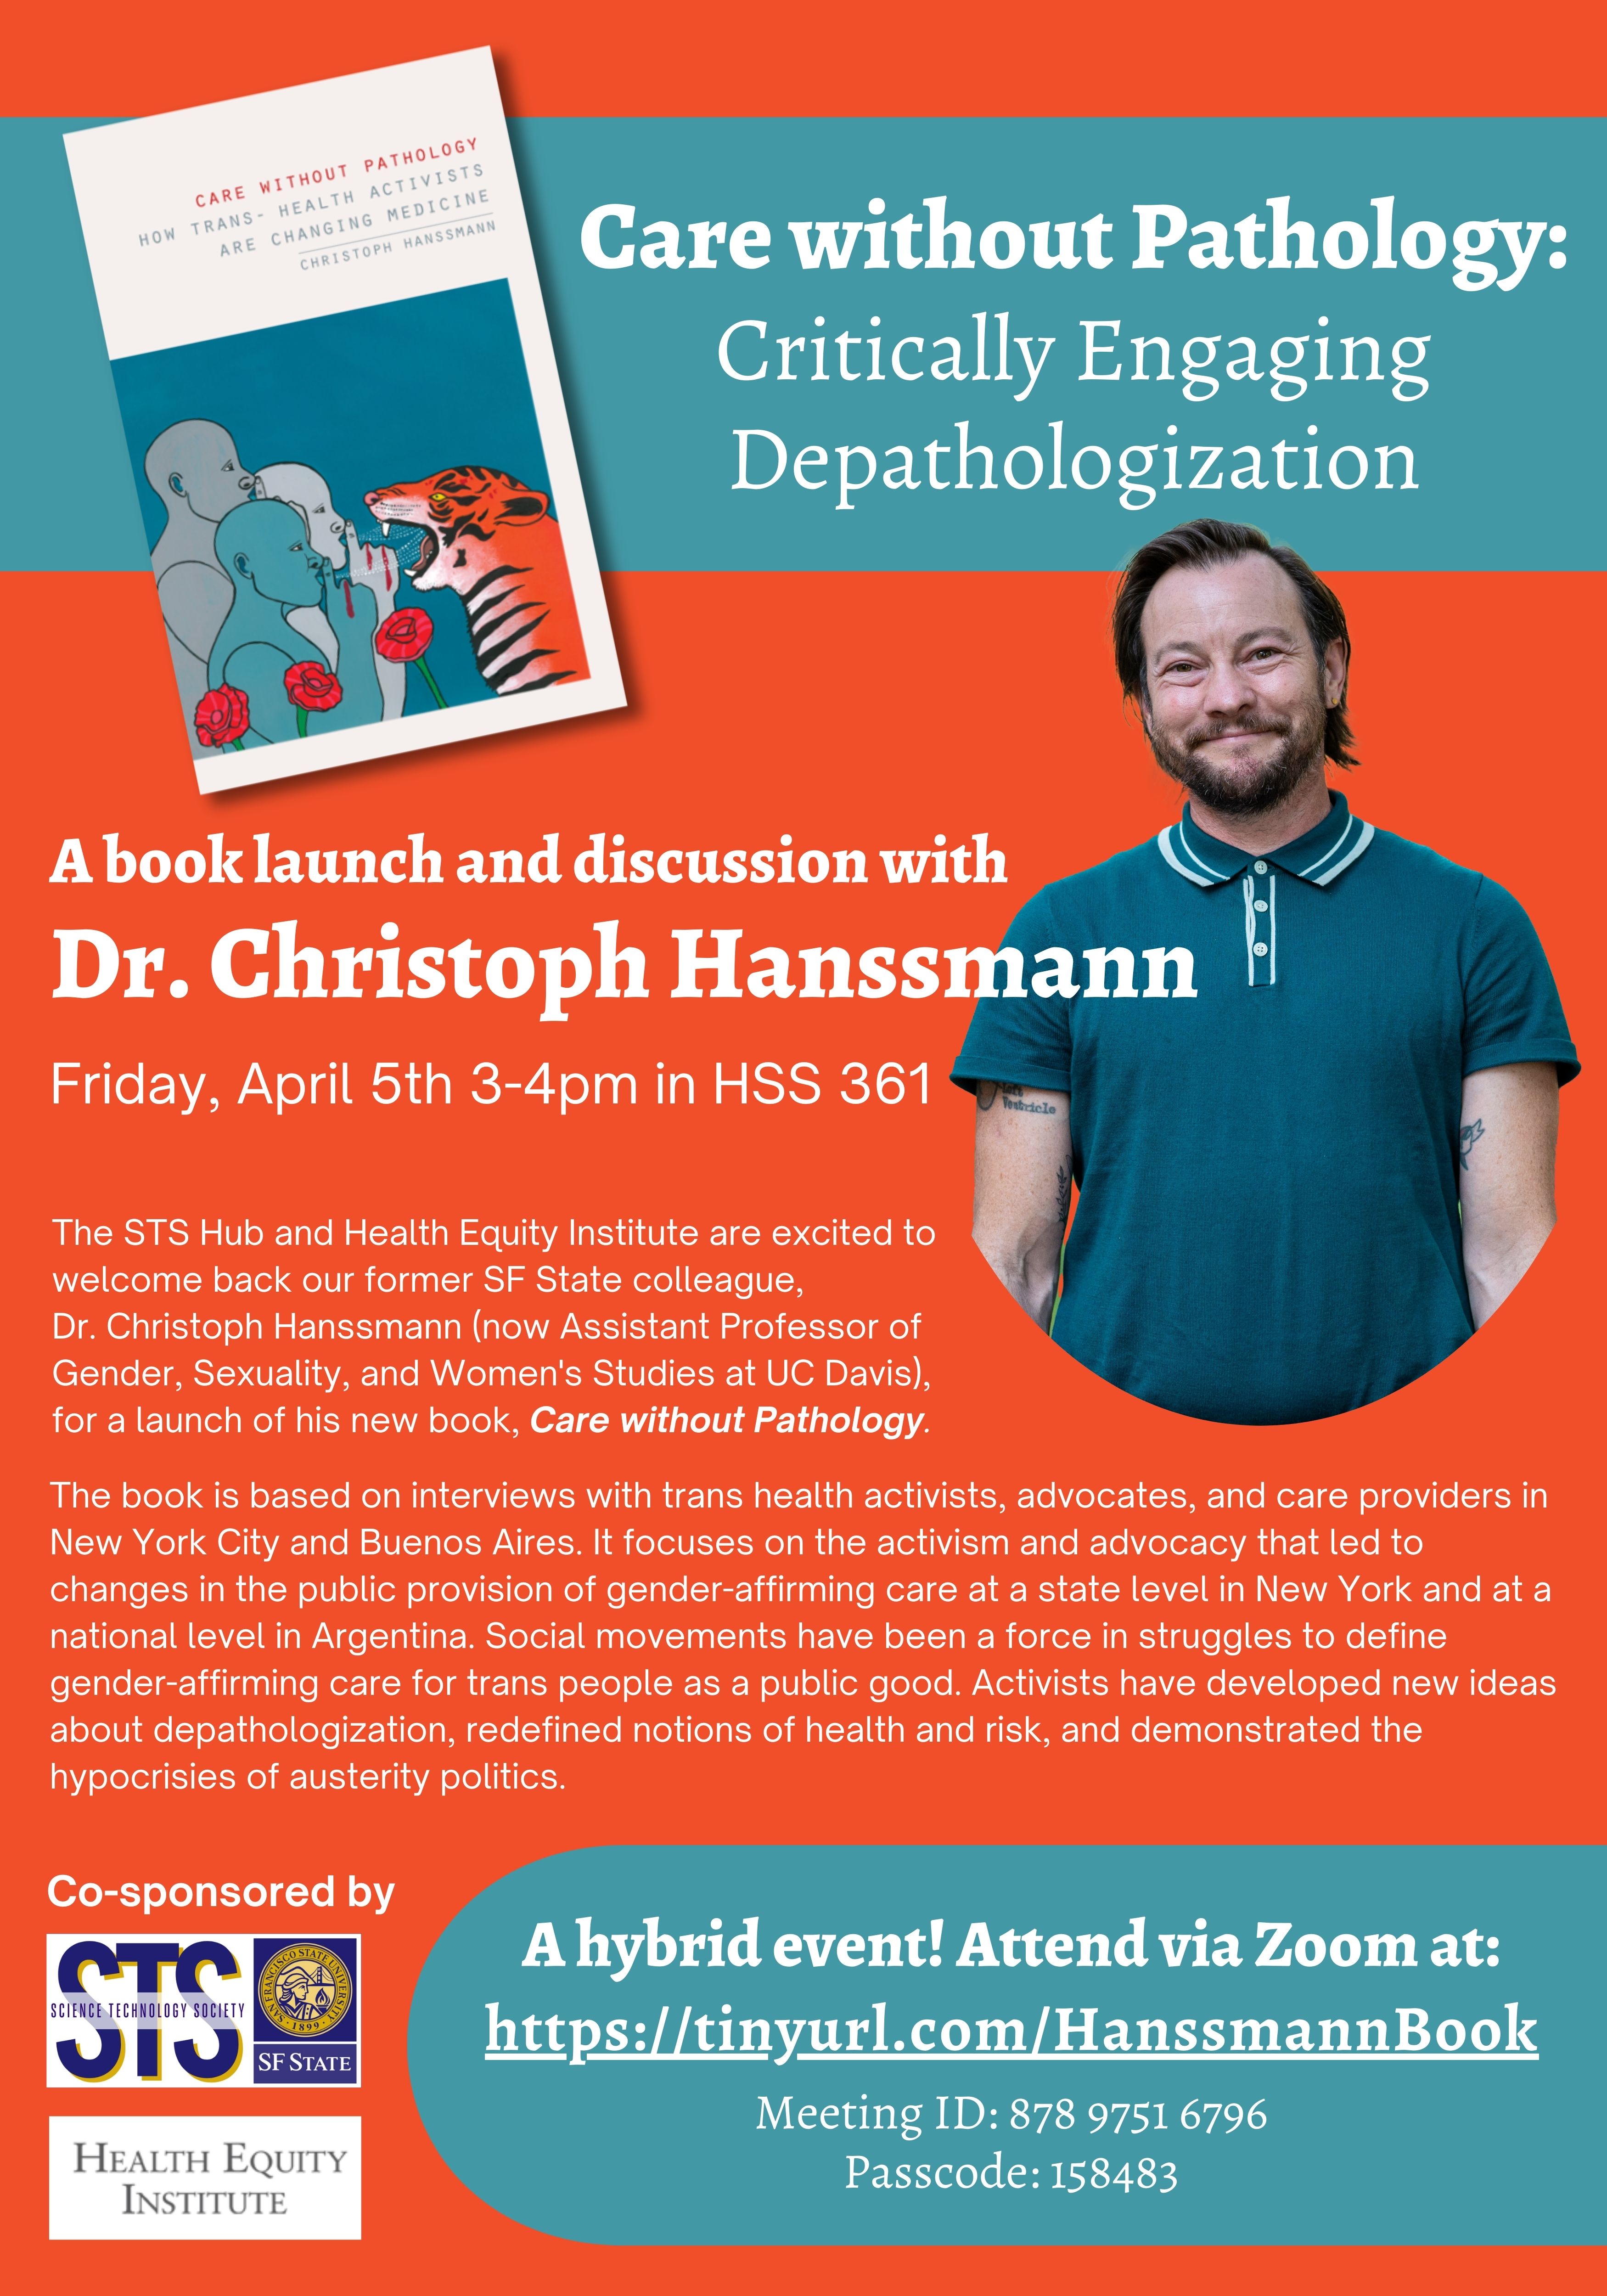 An orange and blue flyer advertising Dr. Chris Haussmann's book launch.